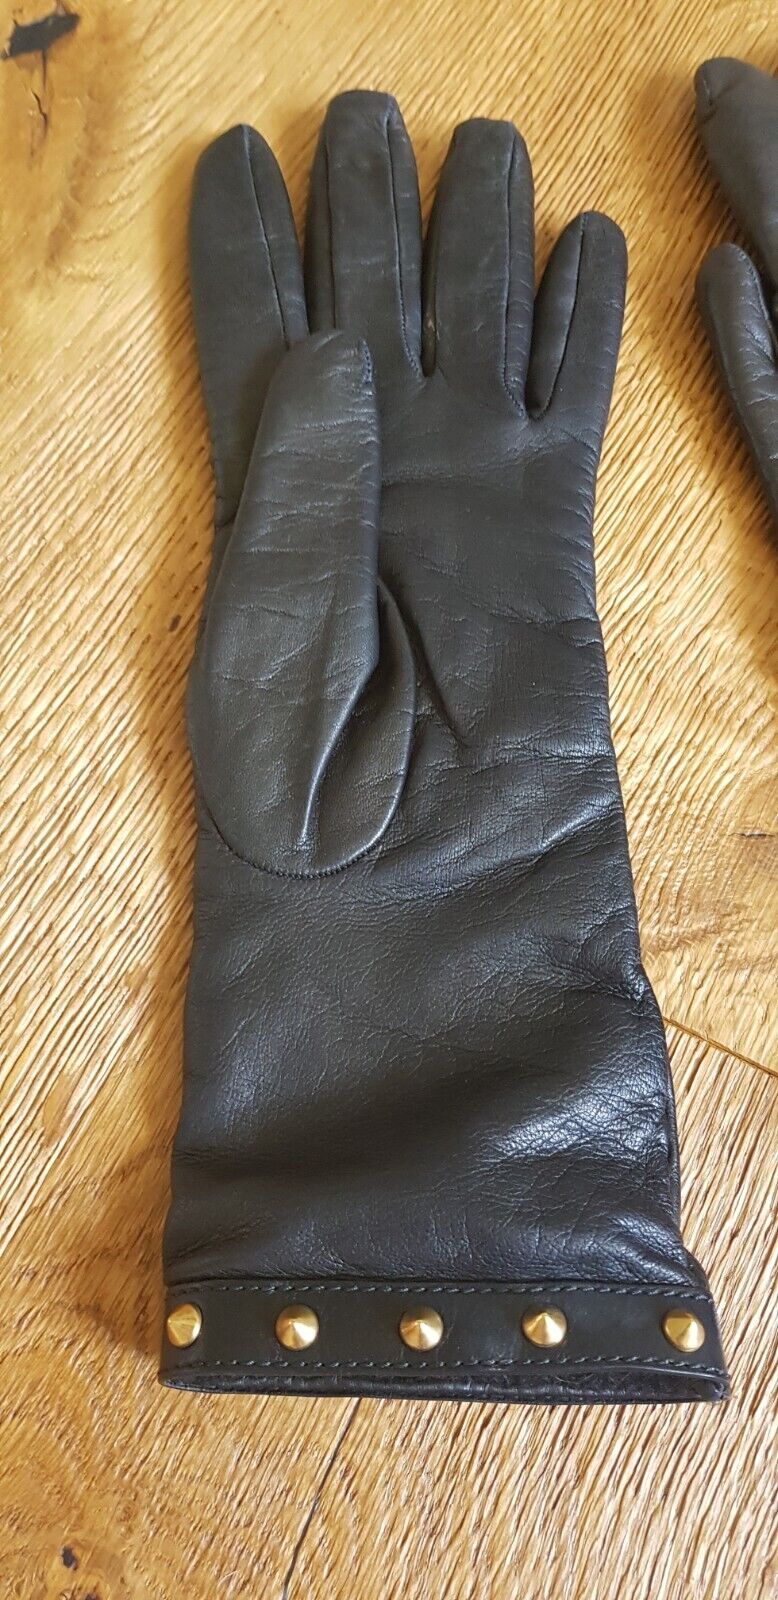 Neue GUCCI LUXUS HW Lederhandschuhe Gr. 7 NAPPA schwarz, design Nieten 